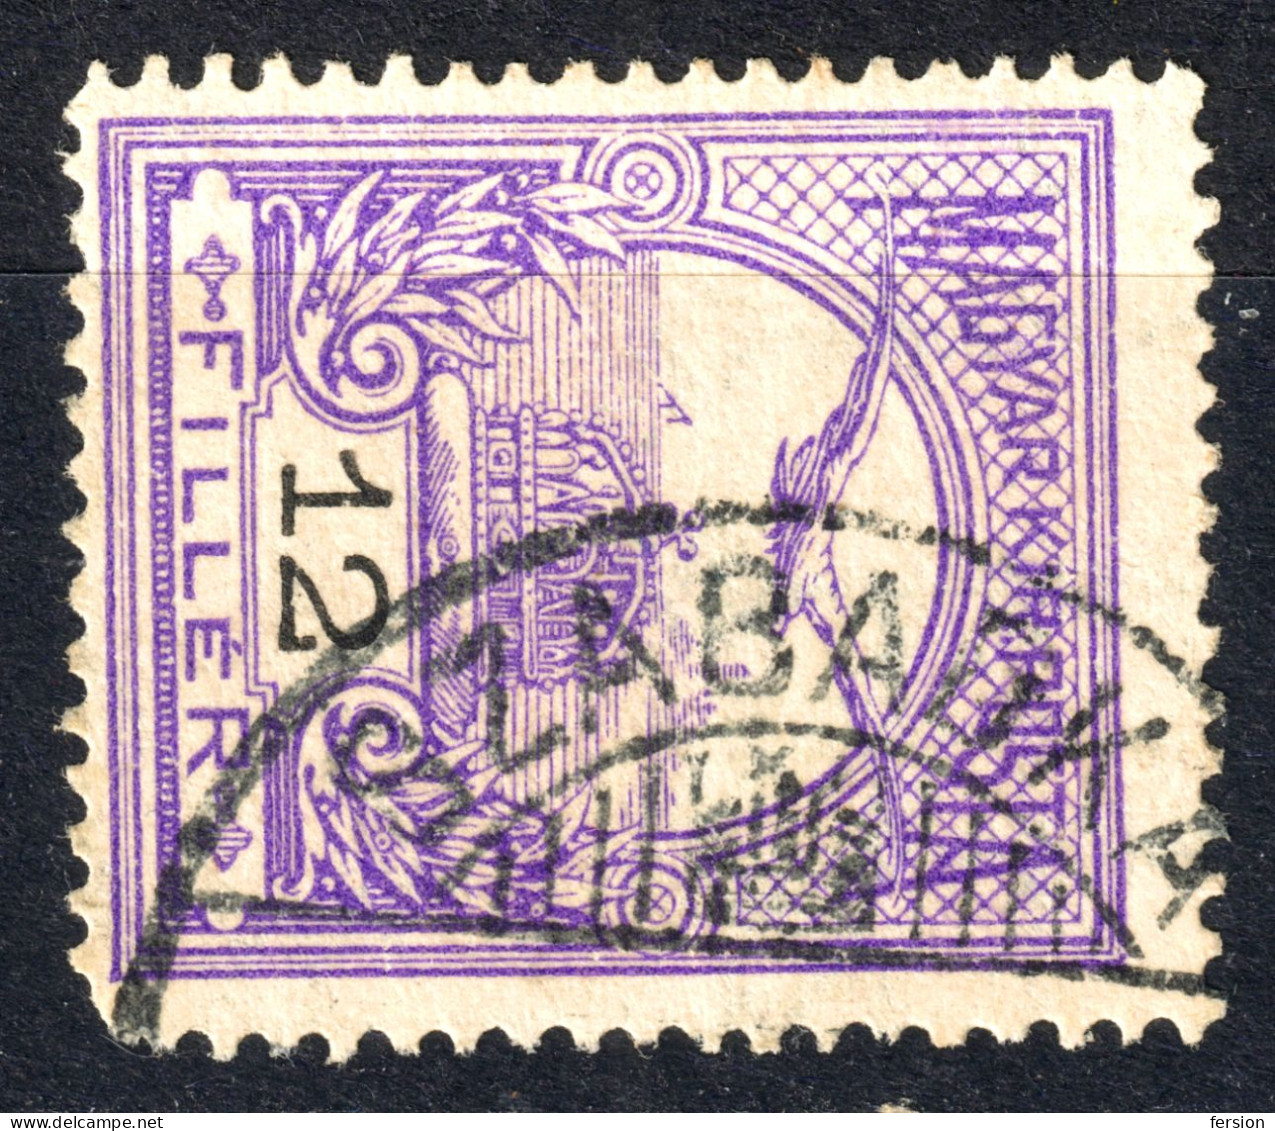 SZABADKA Subotica Postmark TURUL Crown 1910's Hungary SERBIA Vojvodina Bačka BÁCS BODROG County KuK - 12 Fill - Prefilatelia